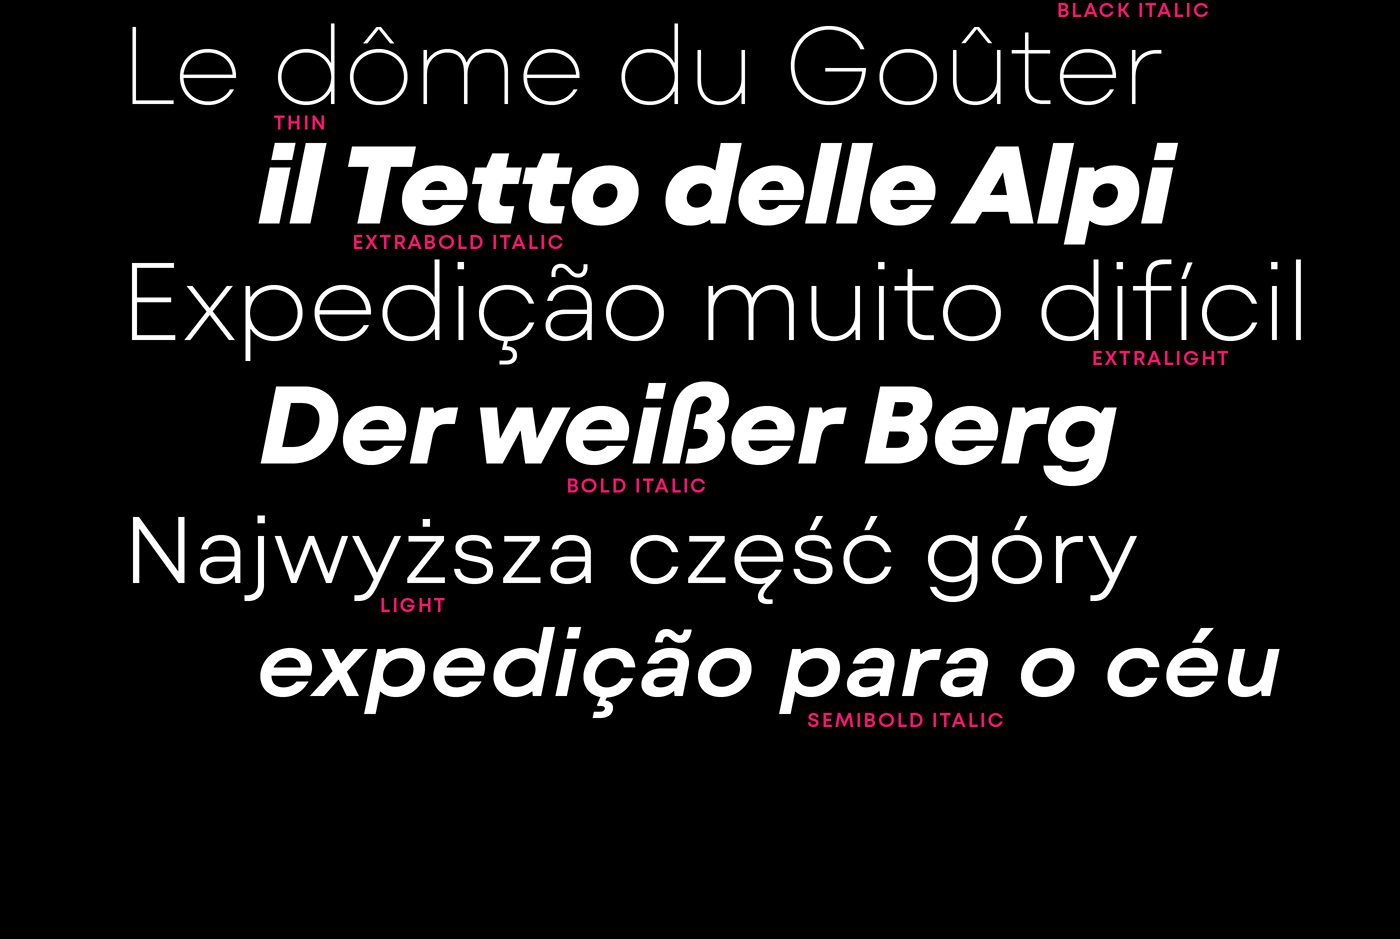 design font geometry modern mont mont blanc sans serif text type Typeface